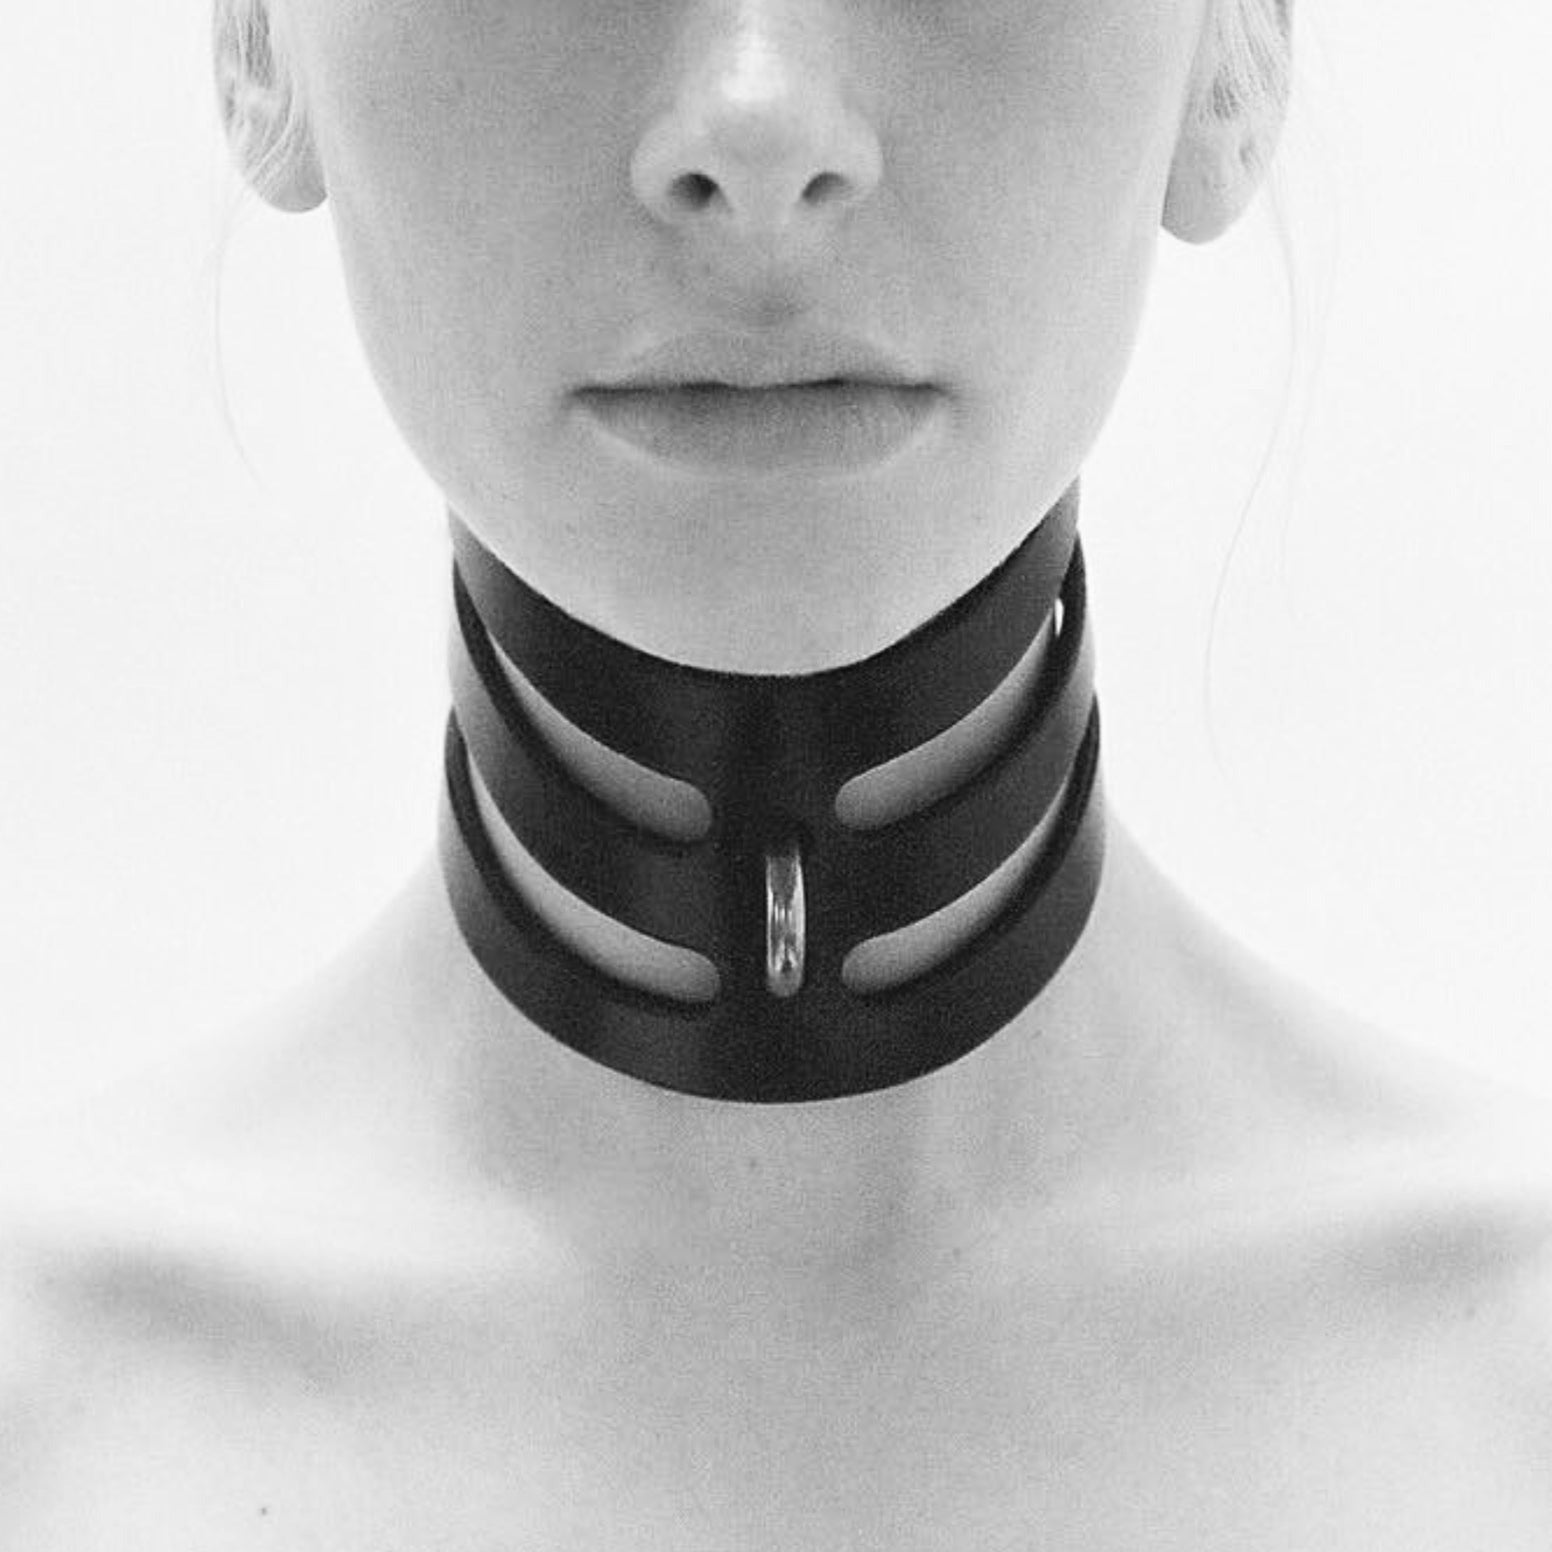 Slave neck collar